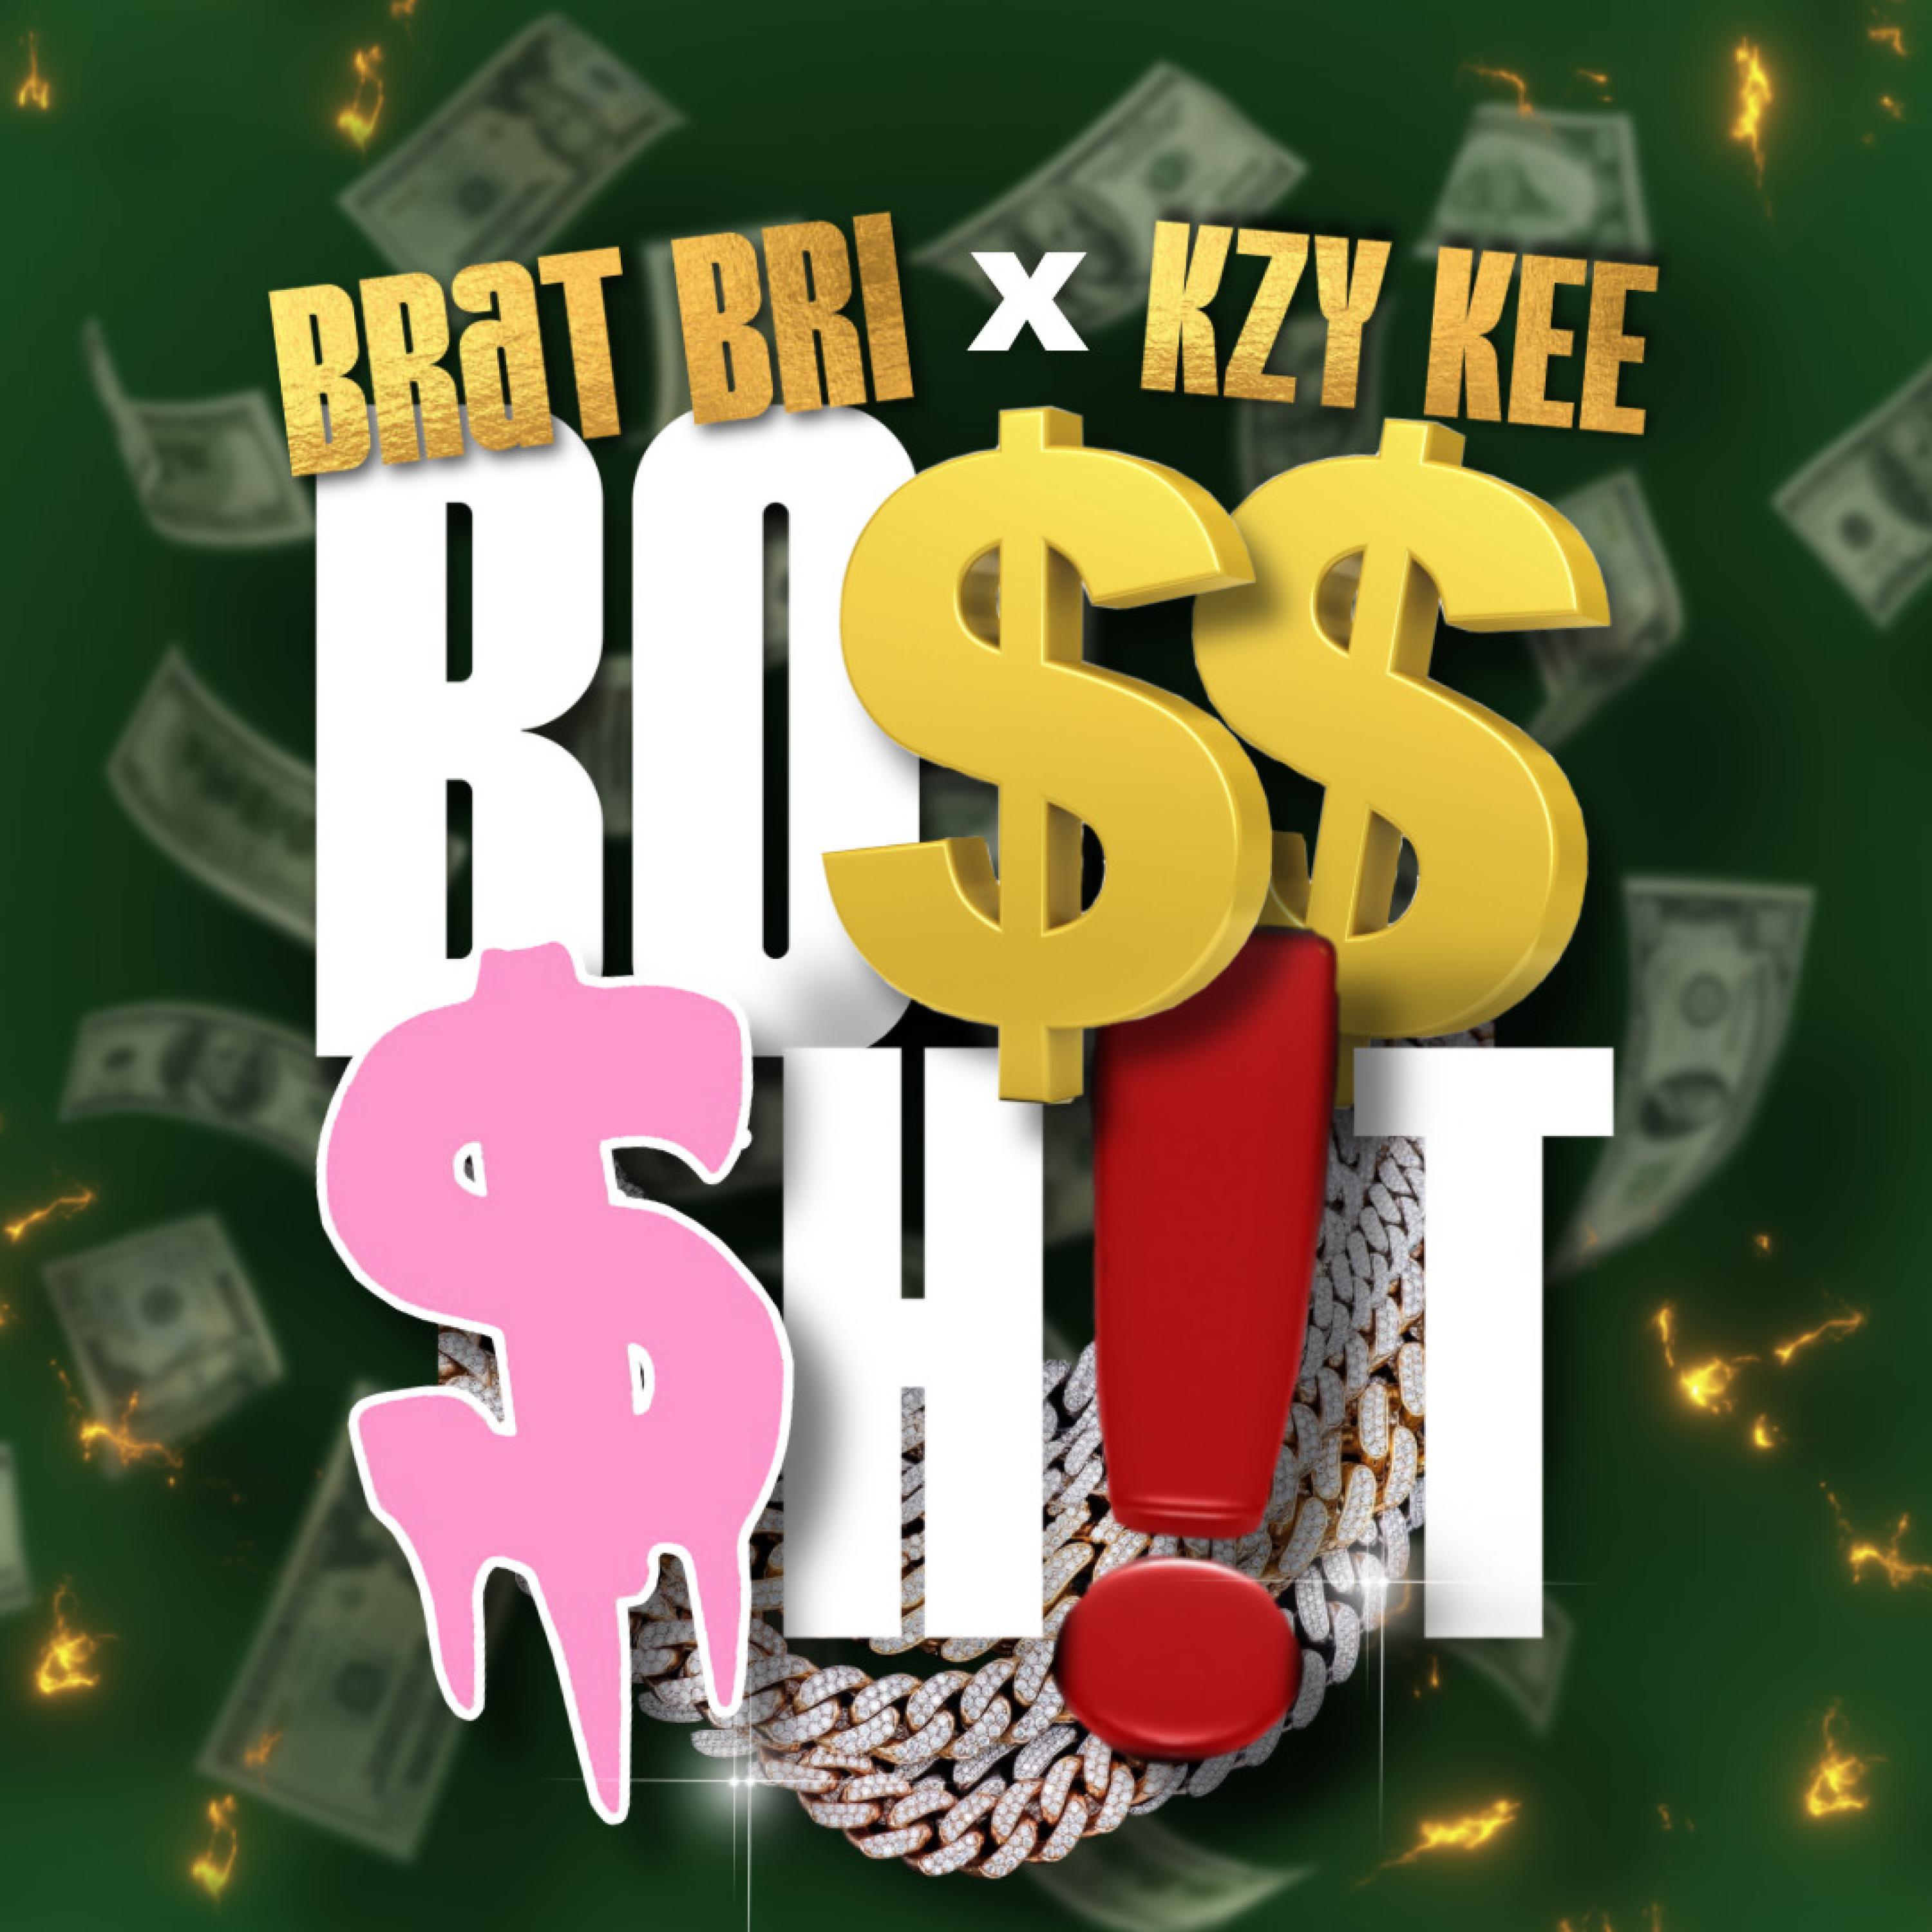 Kzy Kee - Bo$$ Shit (feat. Brat Bri)